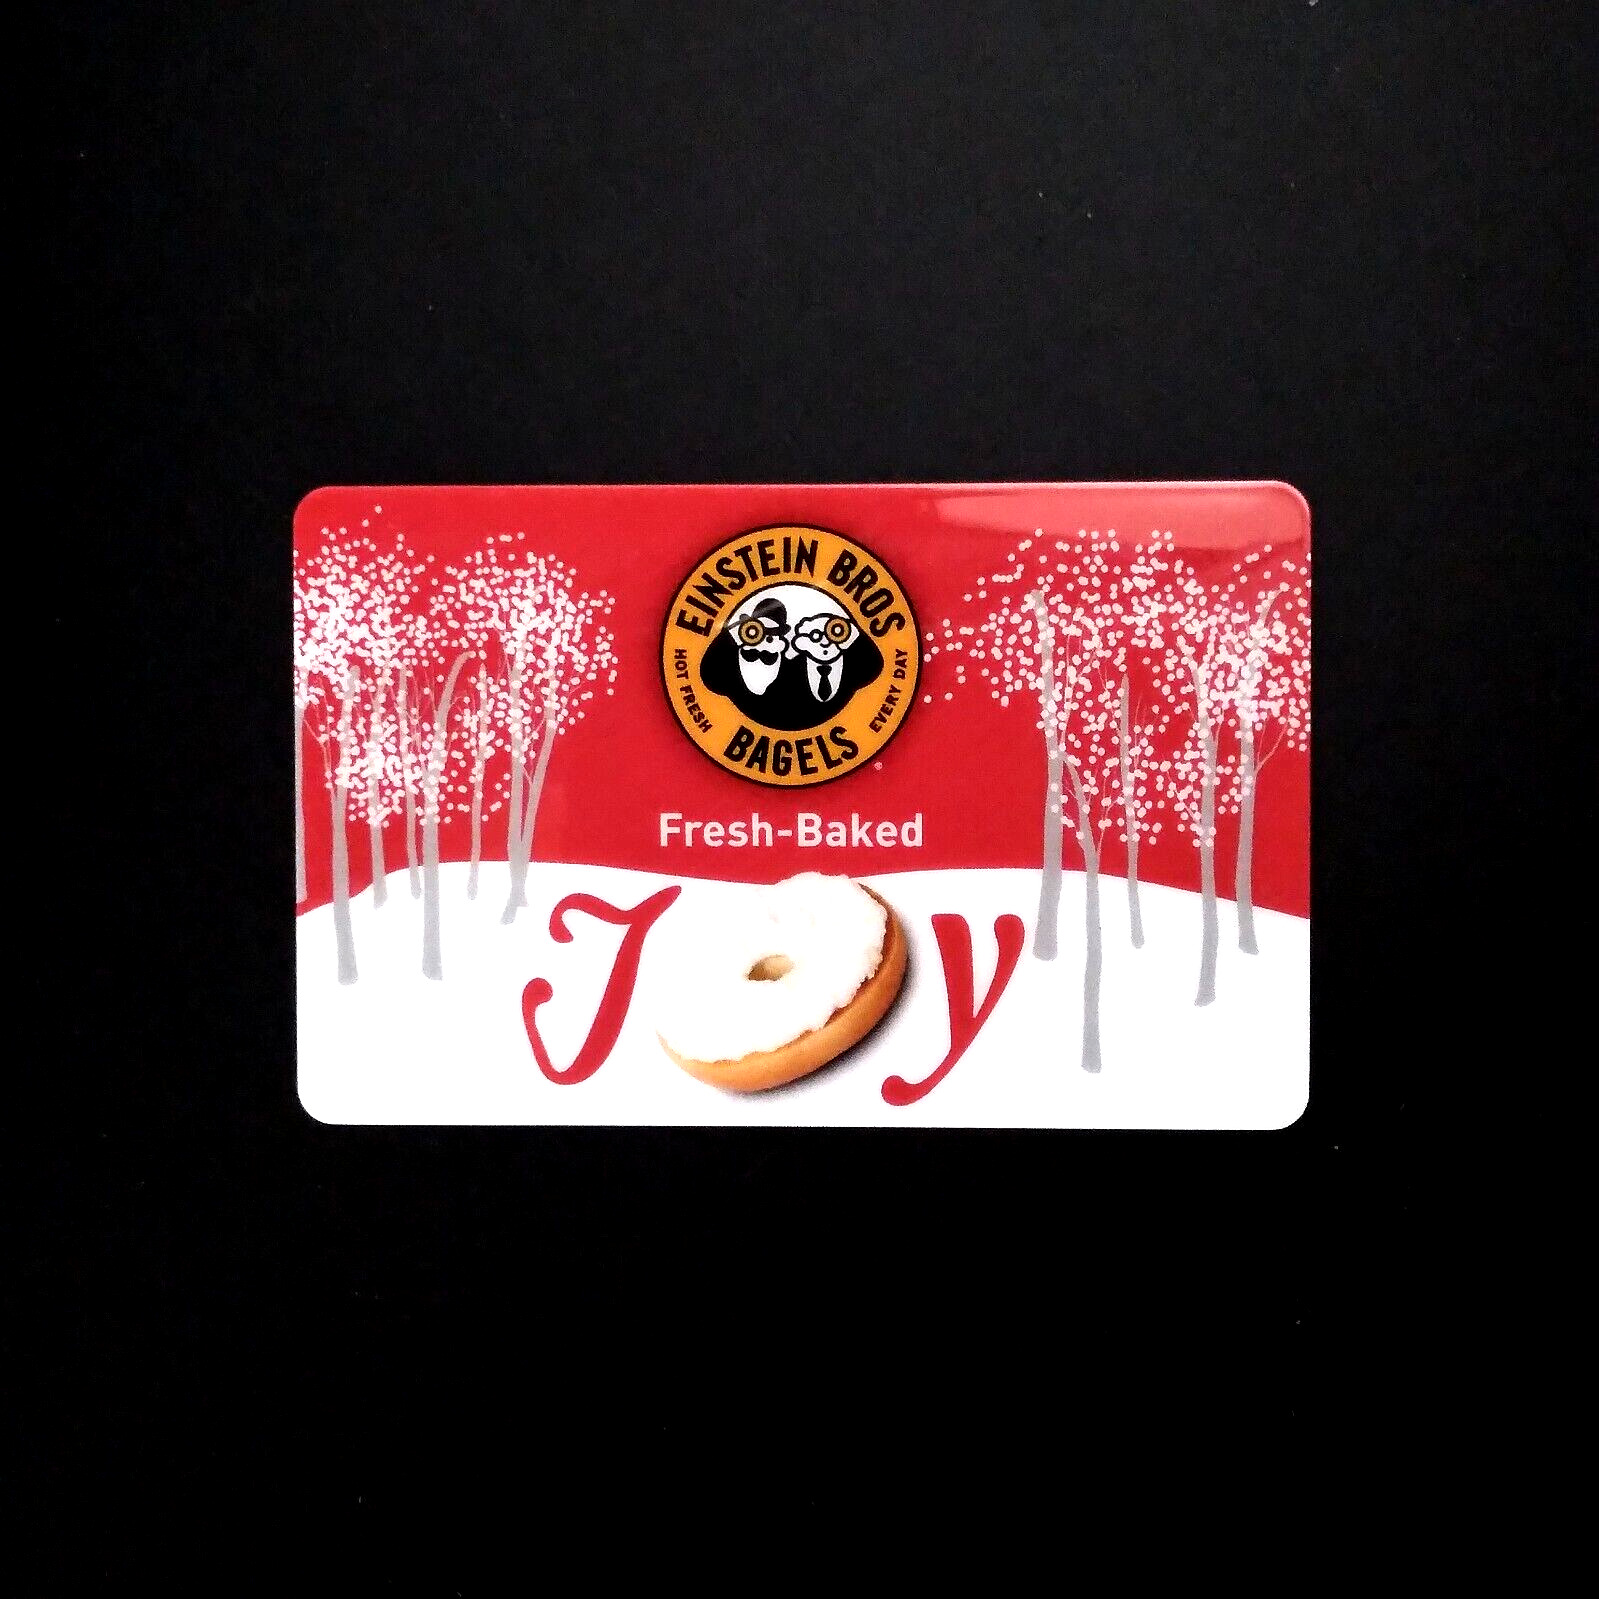 Einstein Bros Bagels Fresh Baked NEW 2013 COLLECTIBLE GIFT CARD $0 #6006